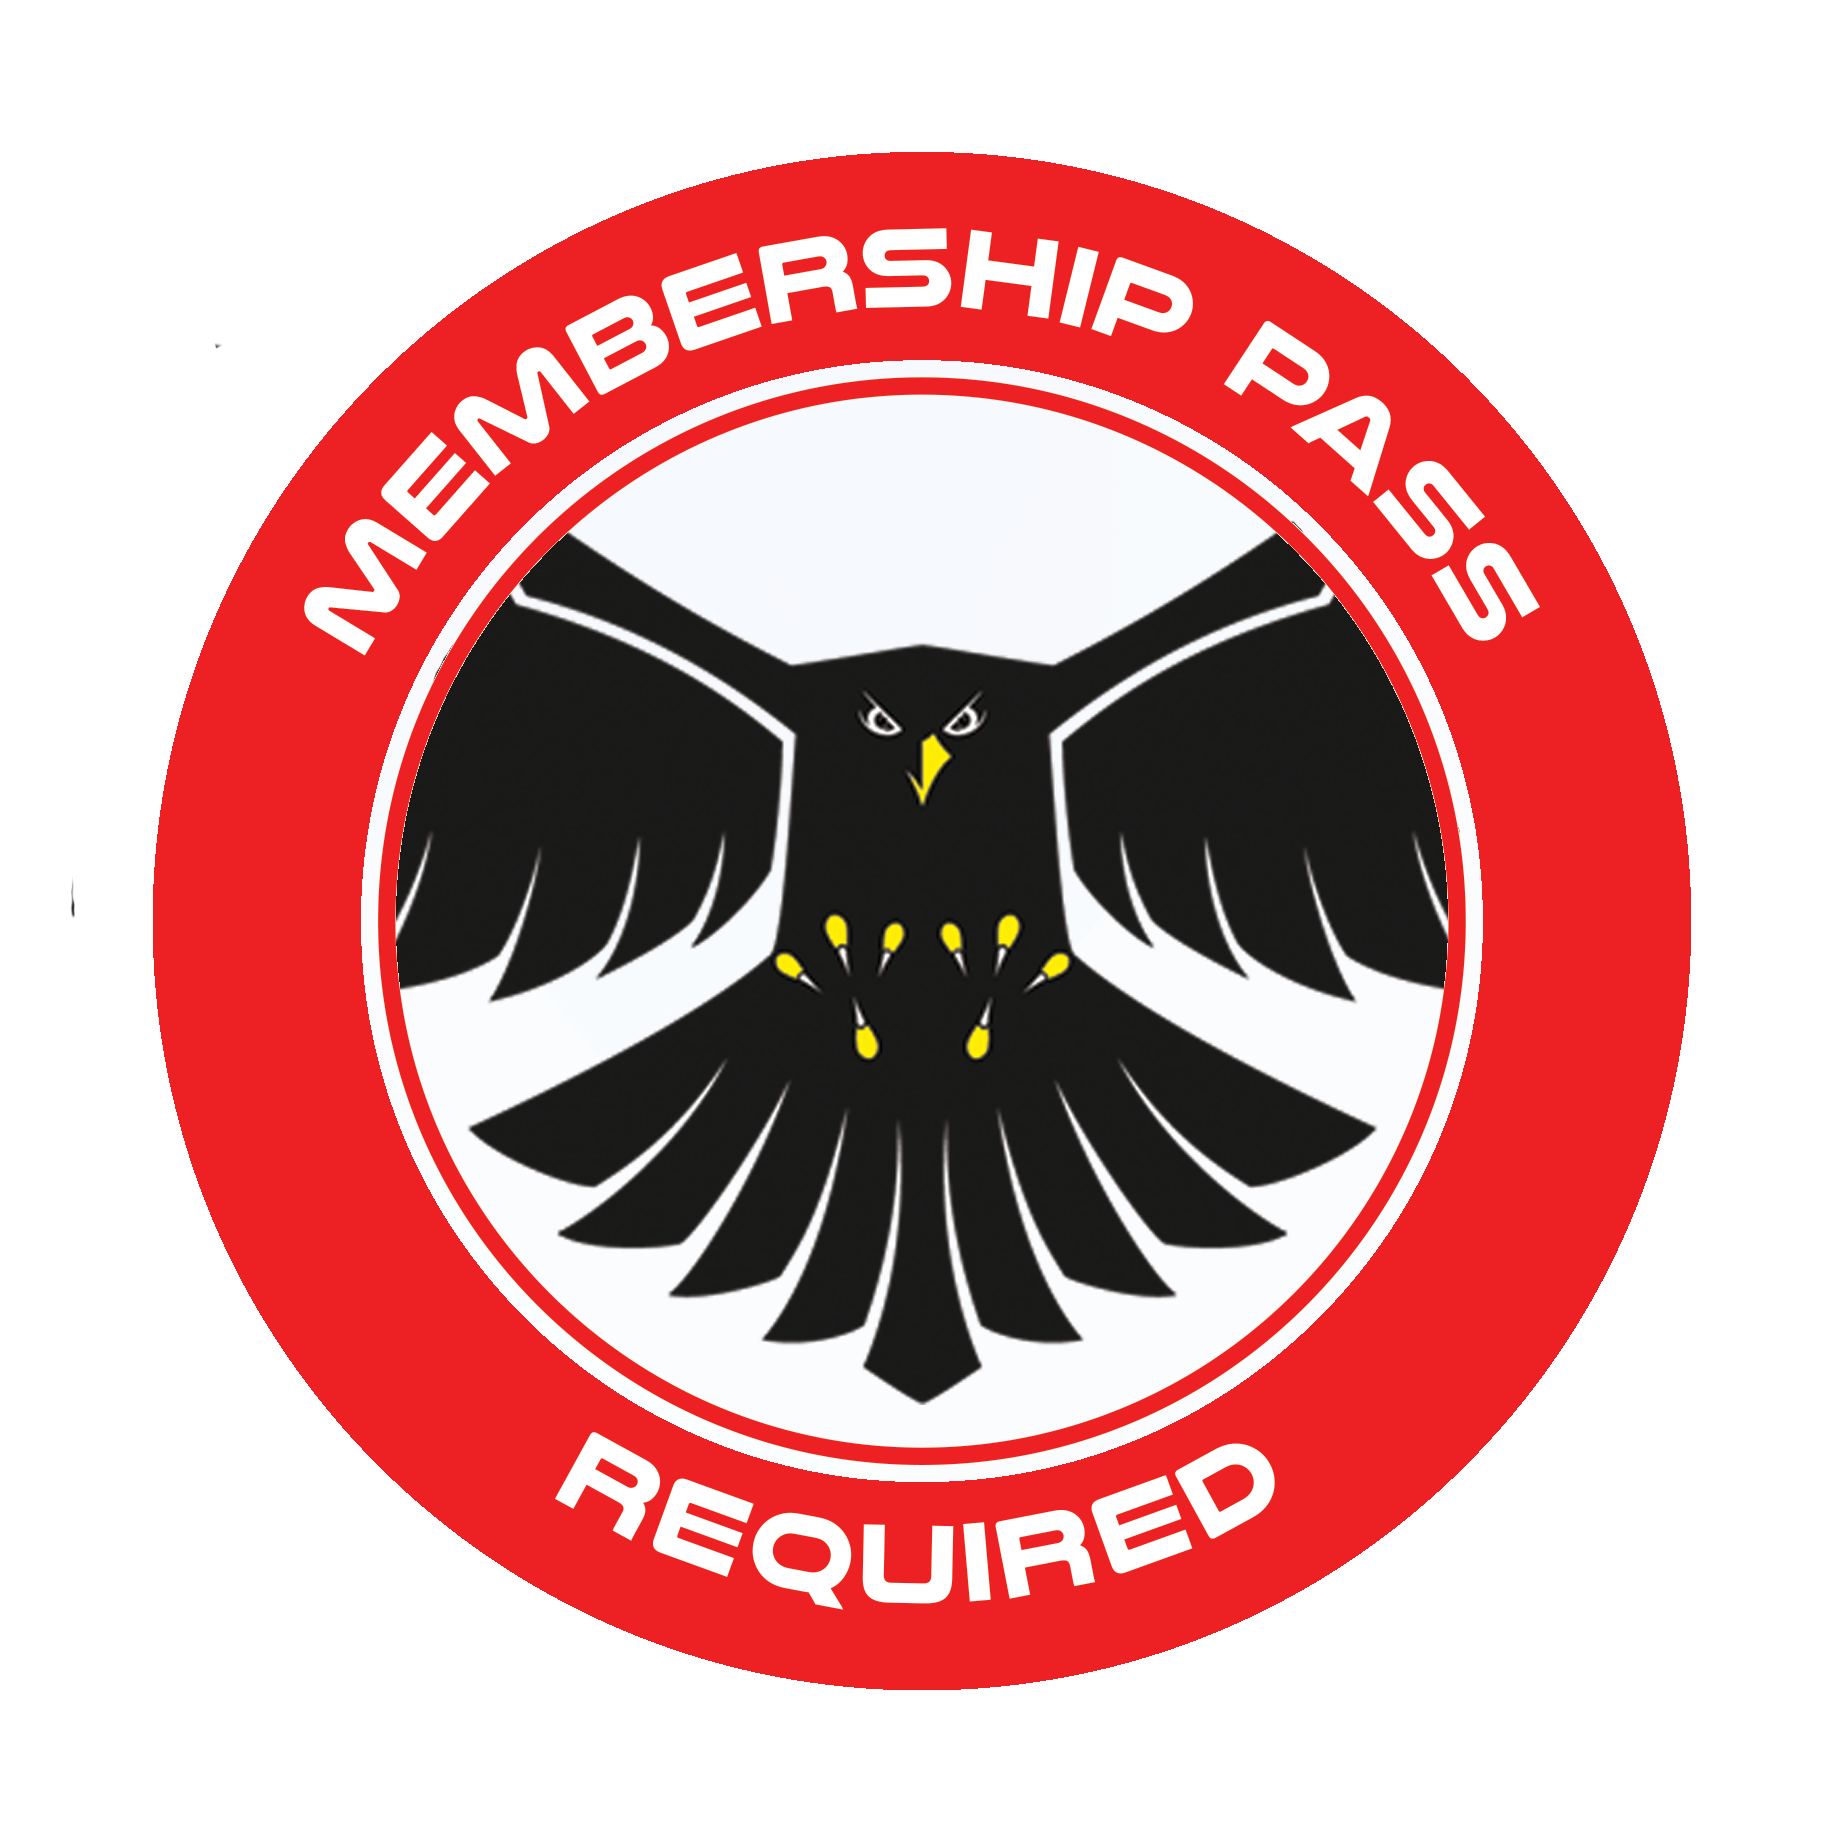 Members Pass